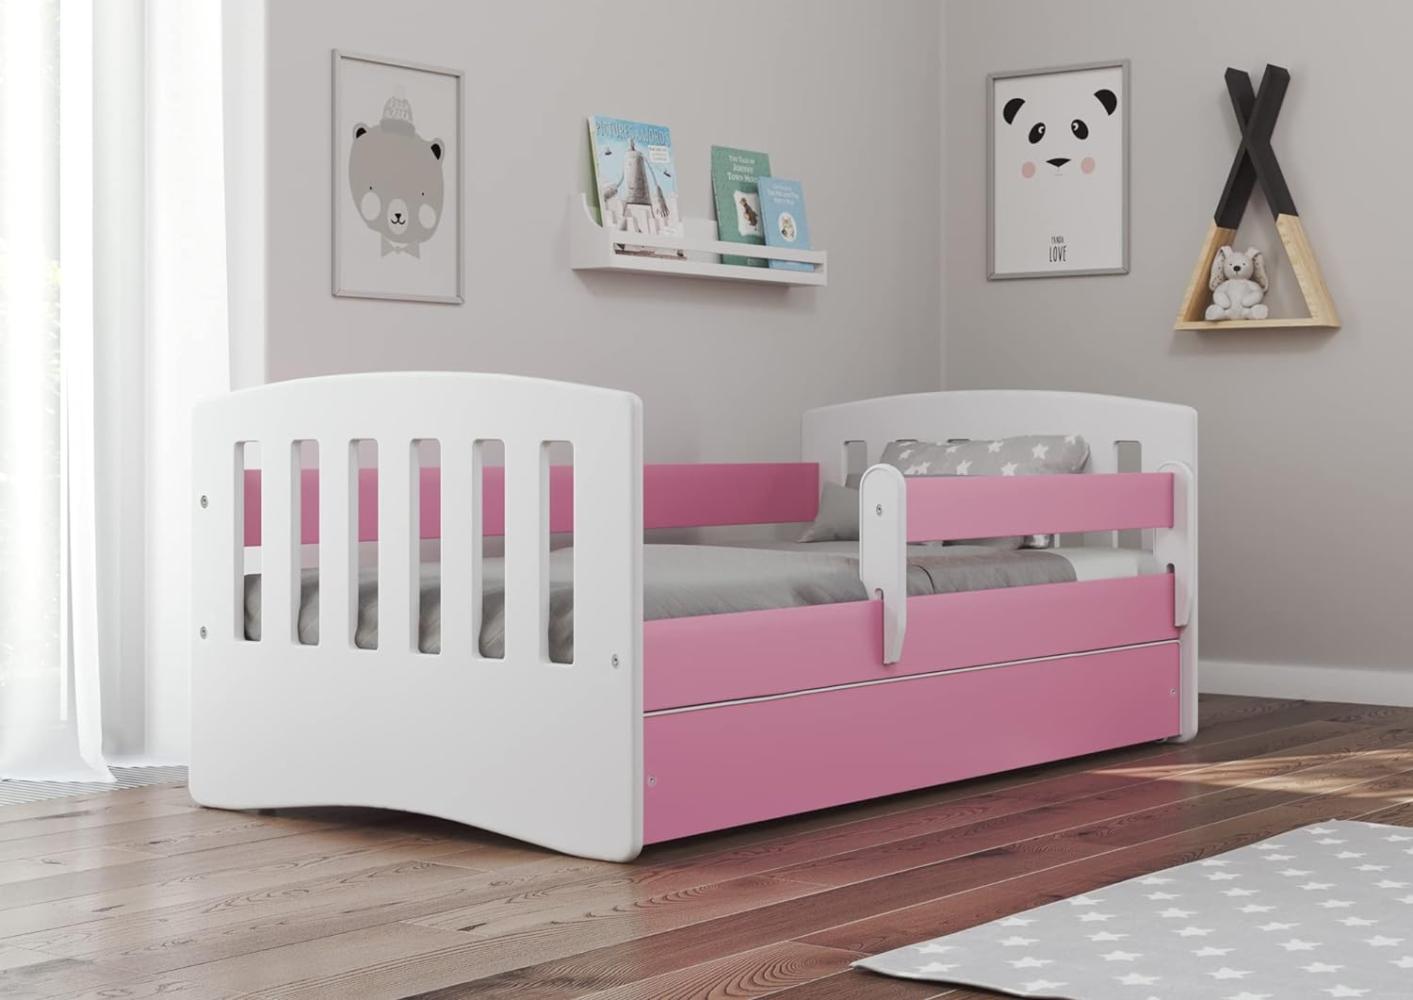 Bjird 'Classic' Kinderbett 80 x 140 cm, Rosa, inkl. Rausfallschutz, Lattenrost und Bettschublade Bild 1